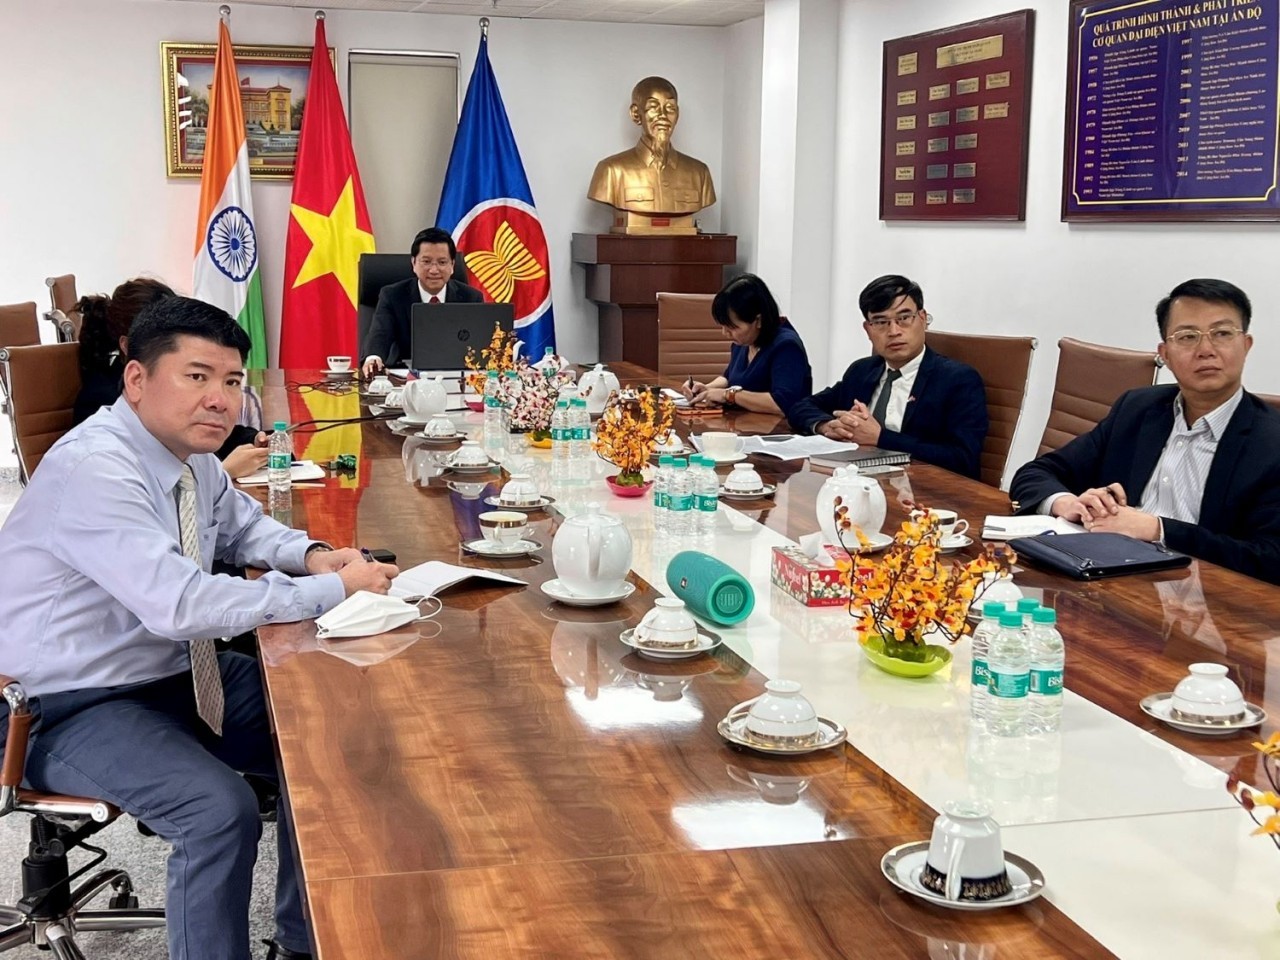 Ambassador Nguyen Thanh Hai and staff of the Vietnamese Embassy at the New Delhi bridge point.